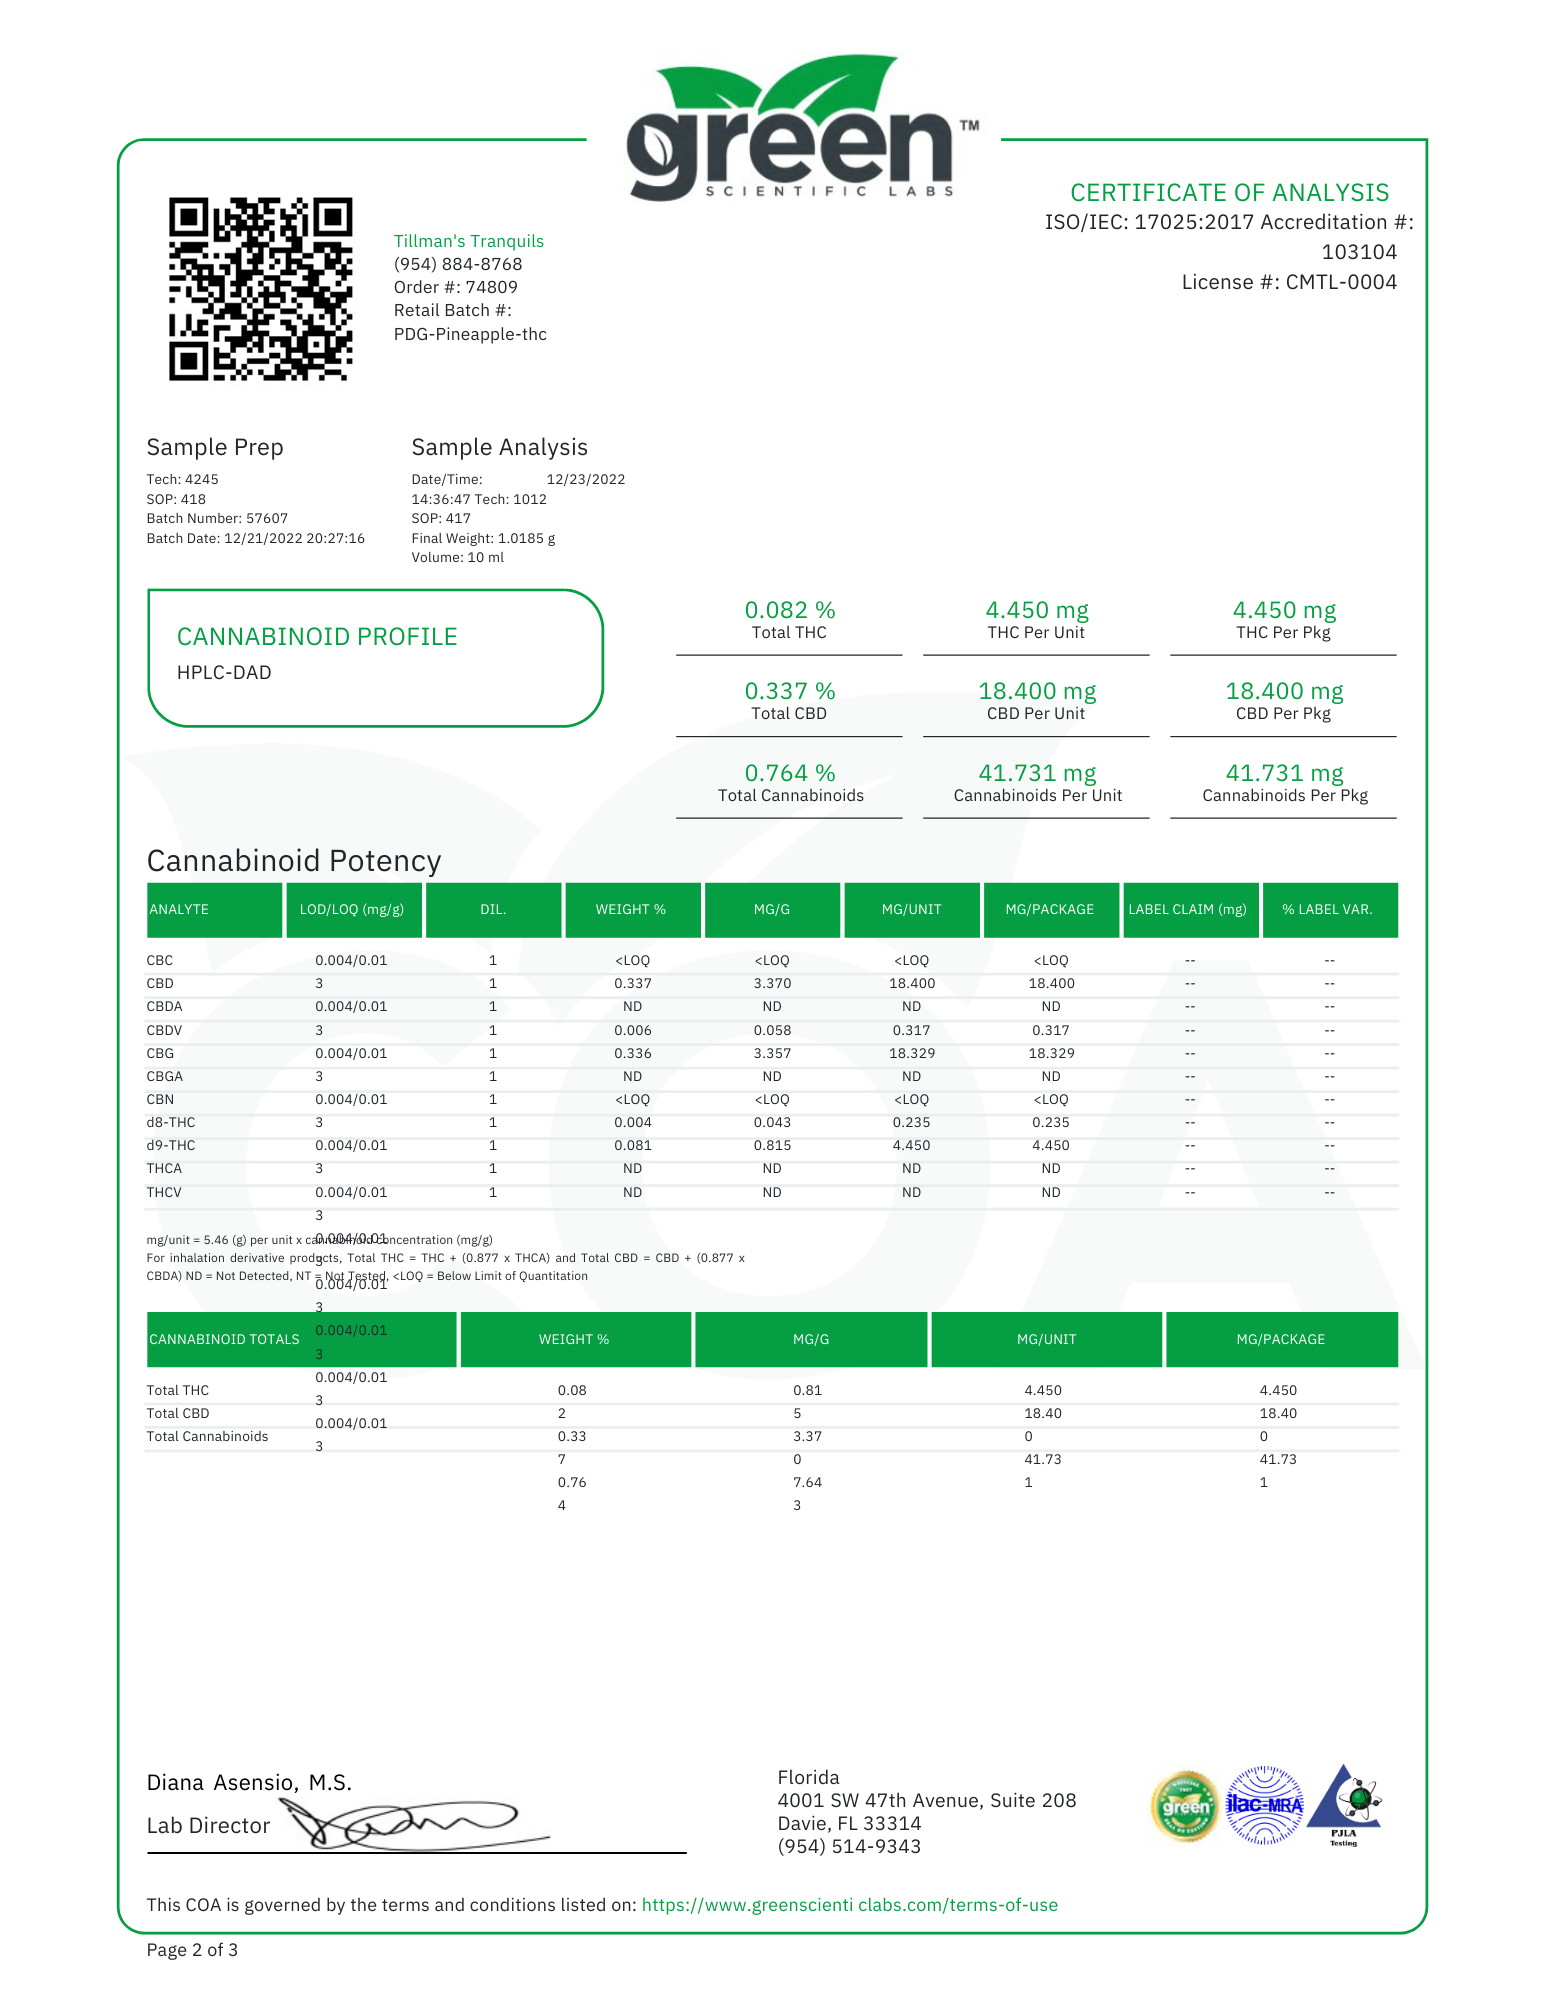 Green certificate of analysis